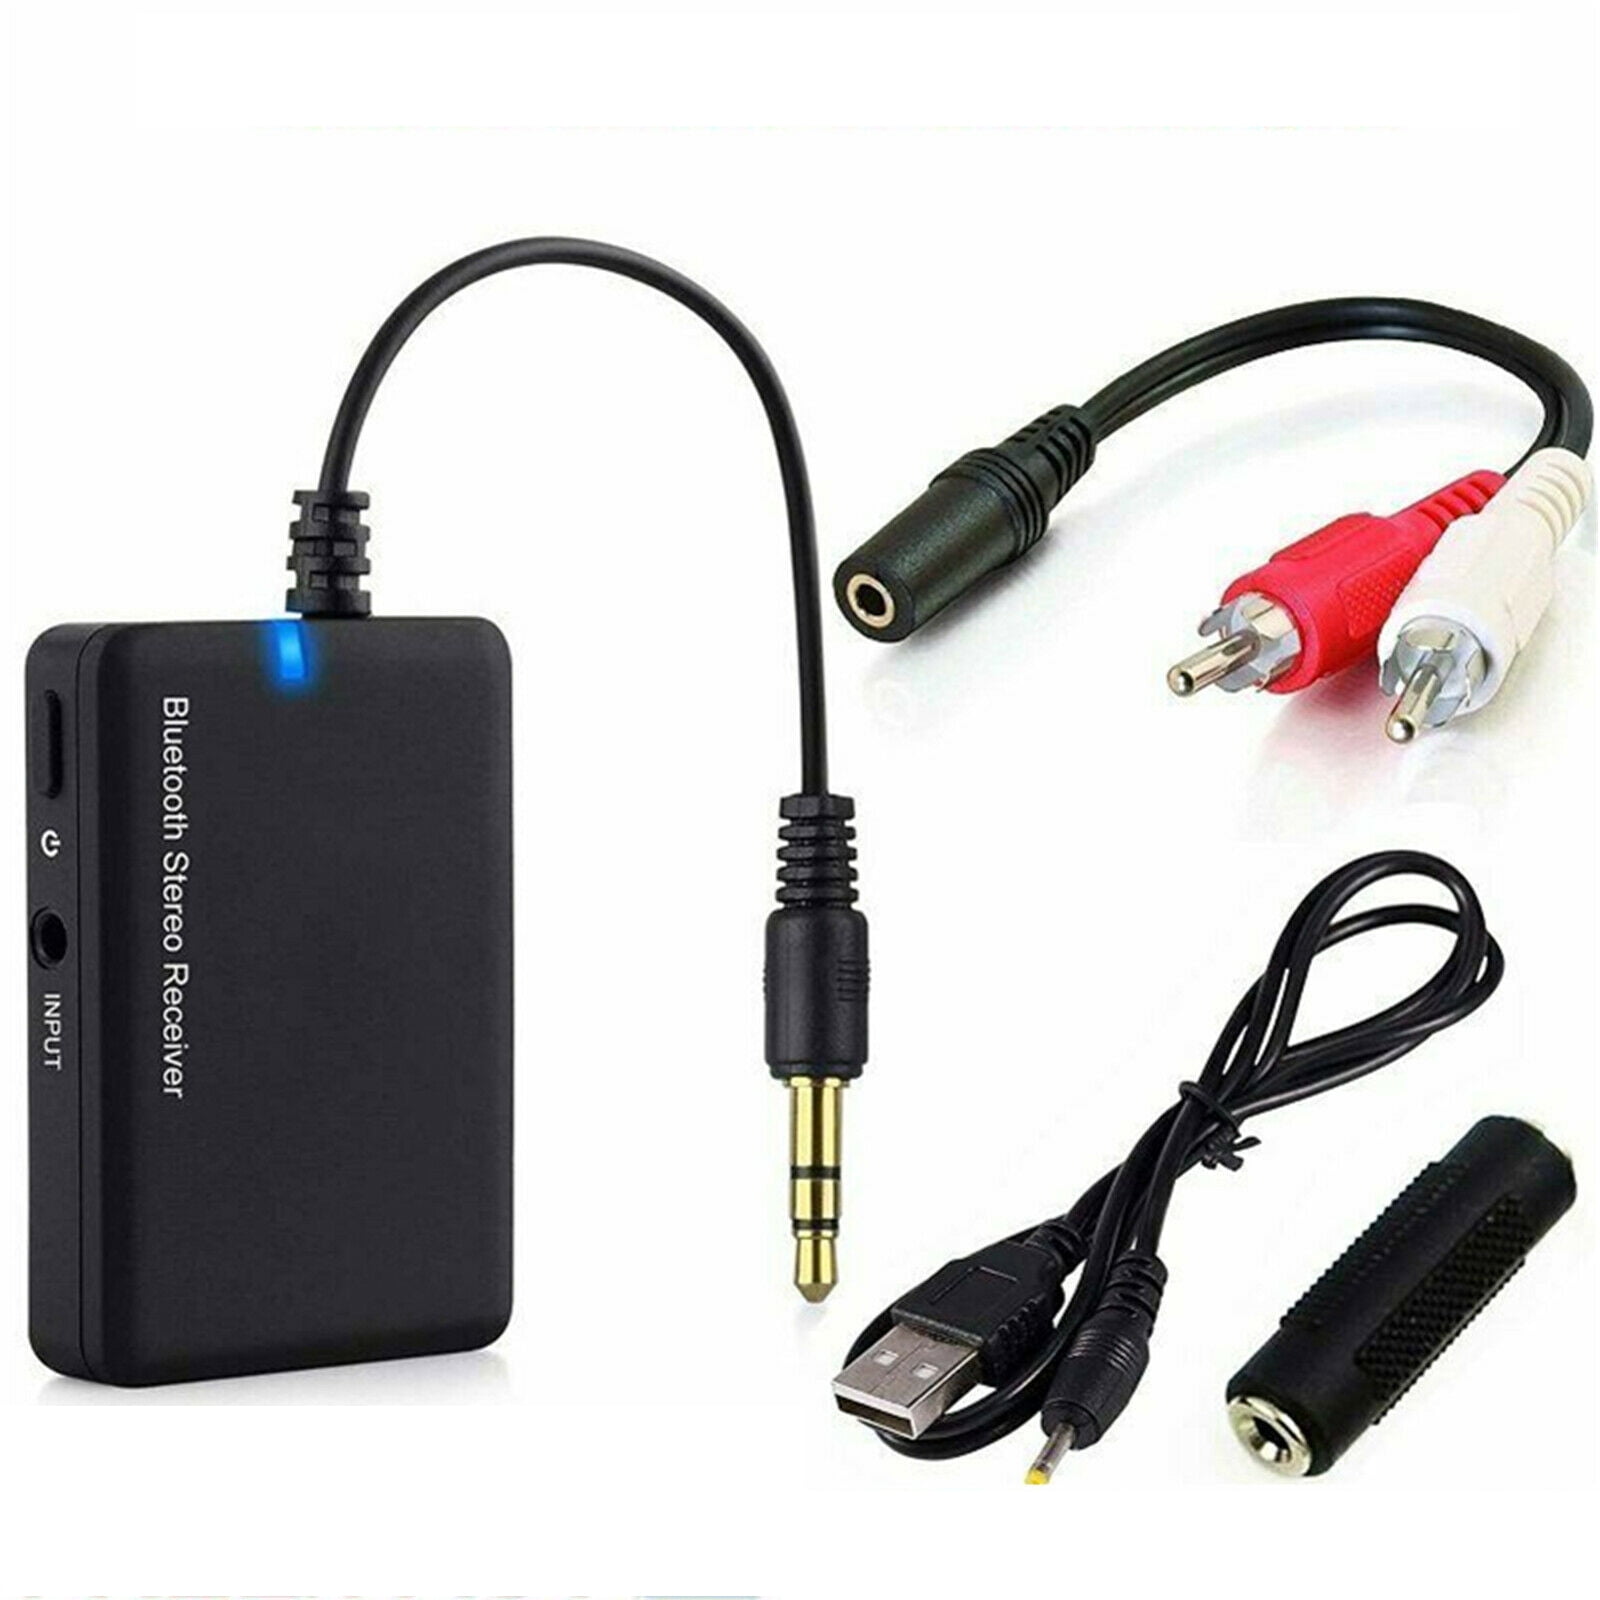 Wireless Bluetooth Stereo Music Adapter BTR006 for Speaker Walmart.com